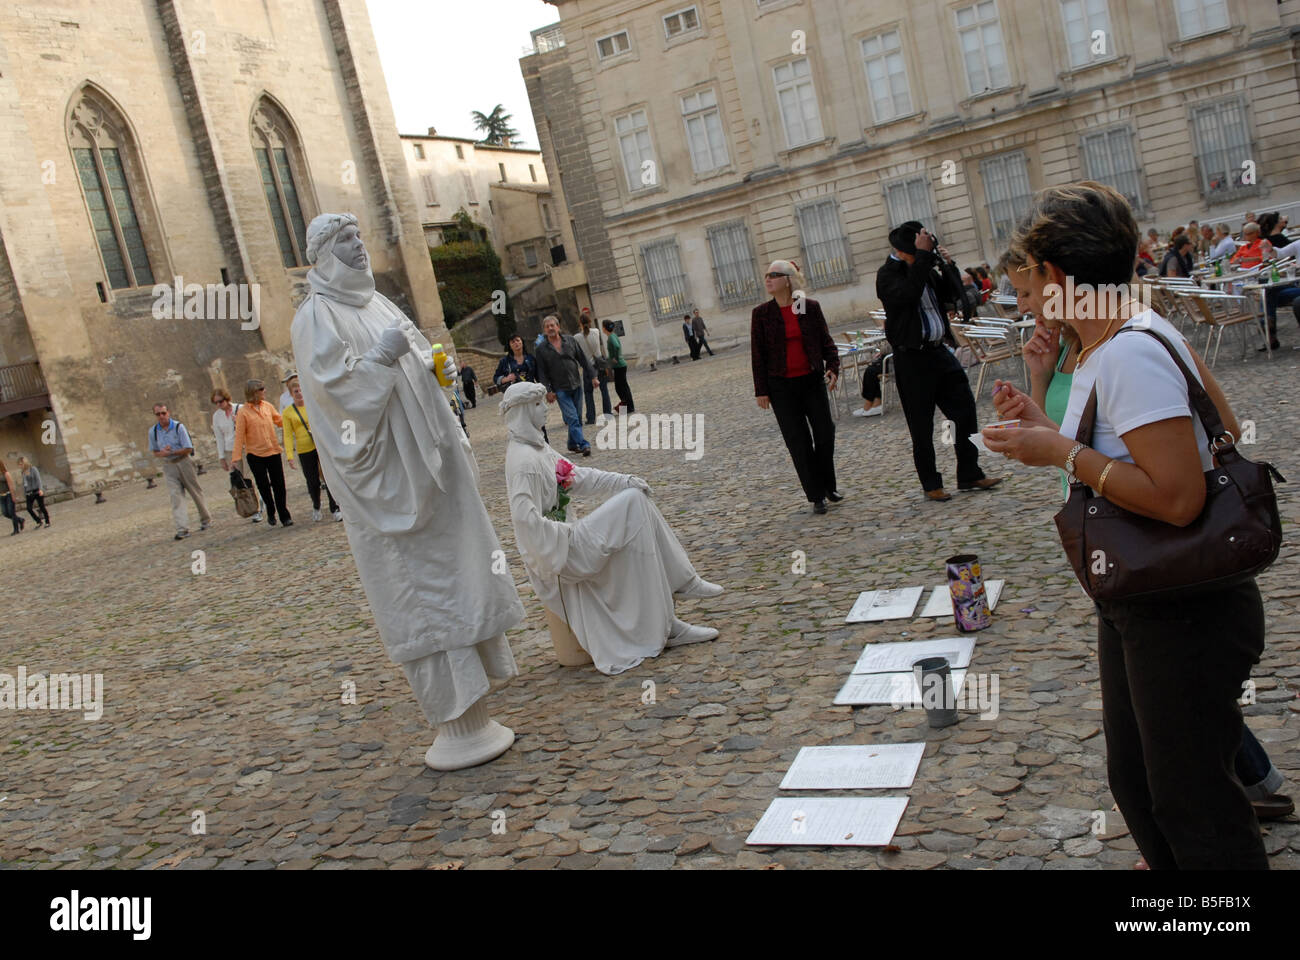 Mime artist entertaining tourists at The Palais de Papes in Avignon France Stock Photo